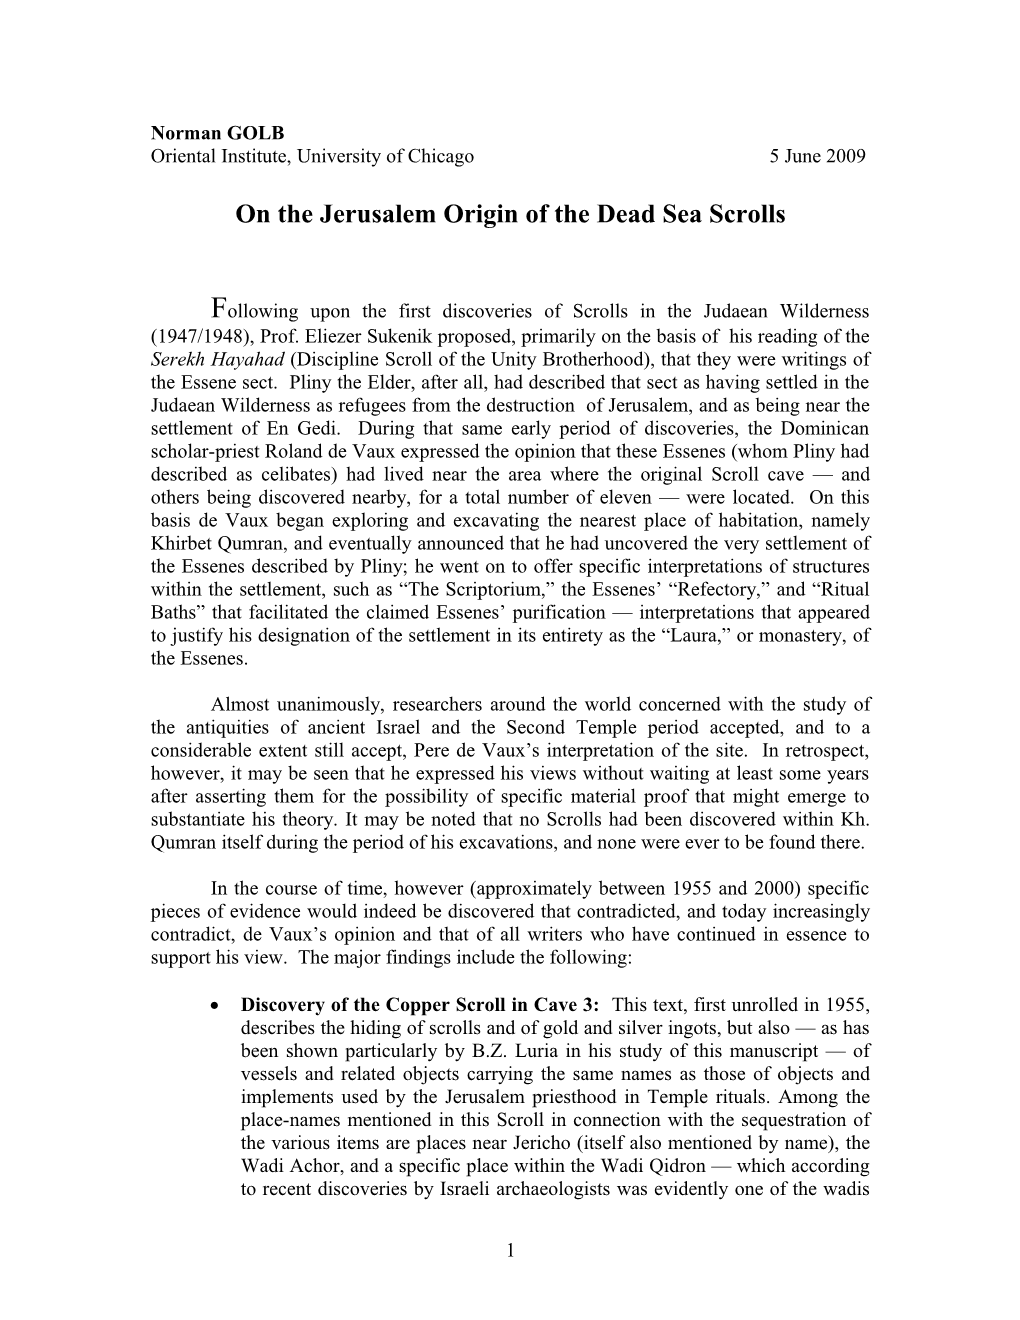 On the Jerusalem Origin of the Dead Sea Scrolls